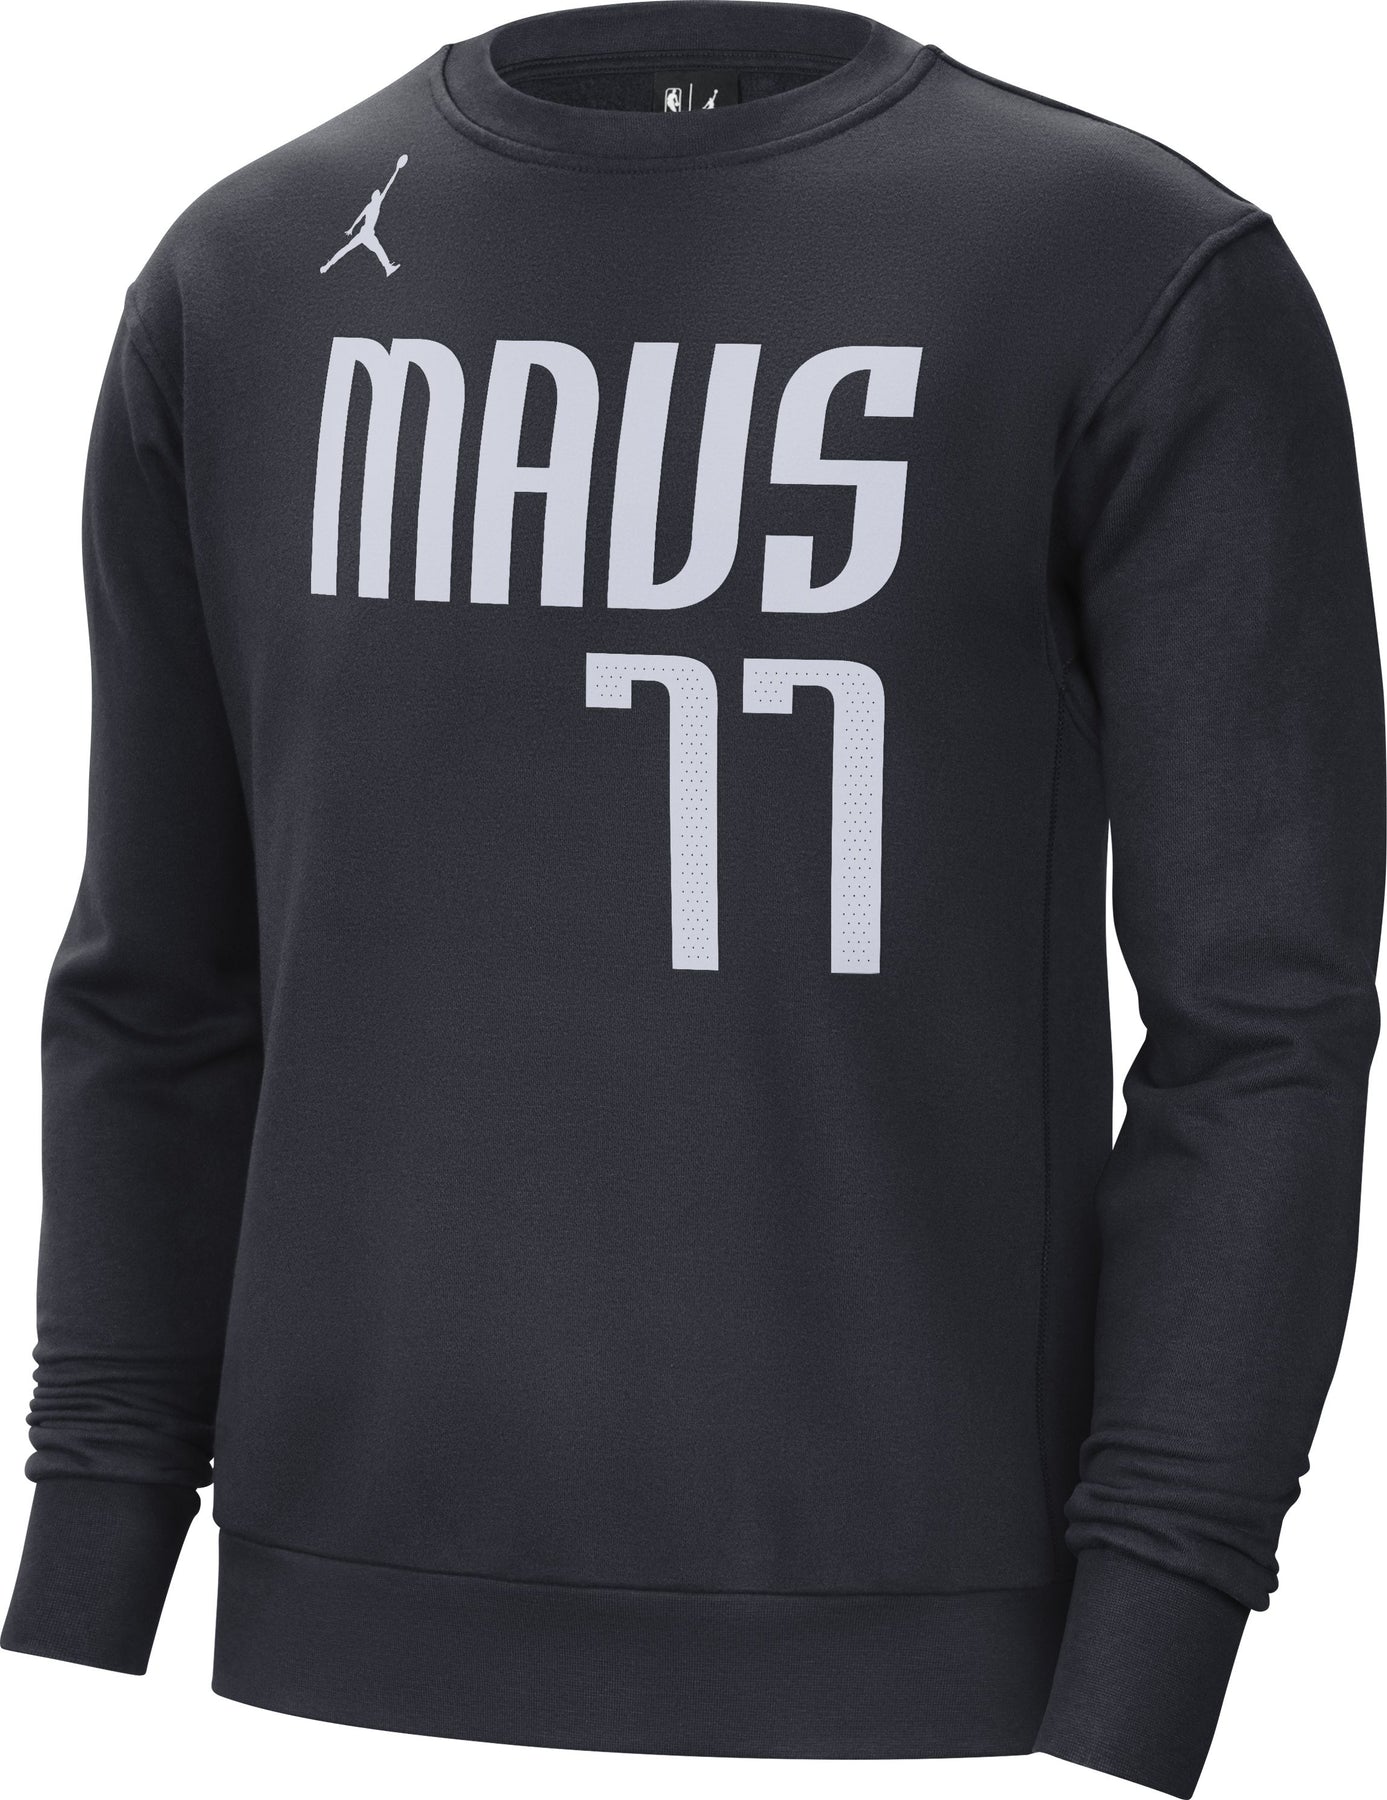 Jordan N&N T-shirt Statement Edition - Dallas Mavericks Luka